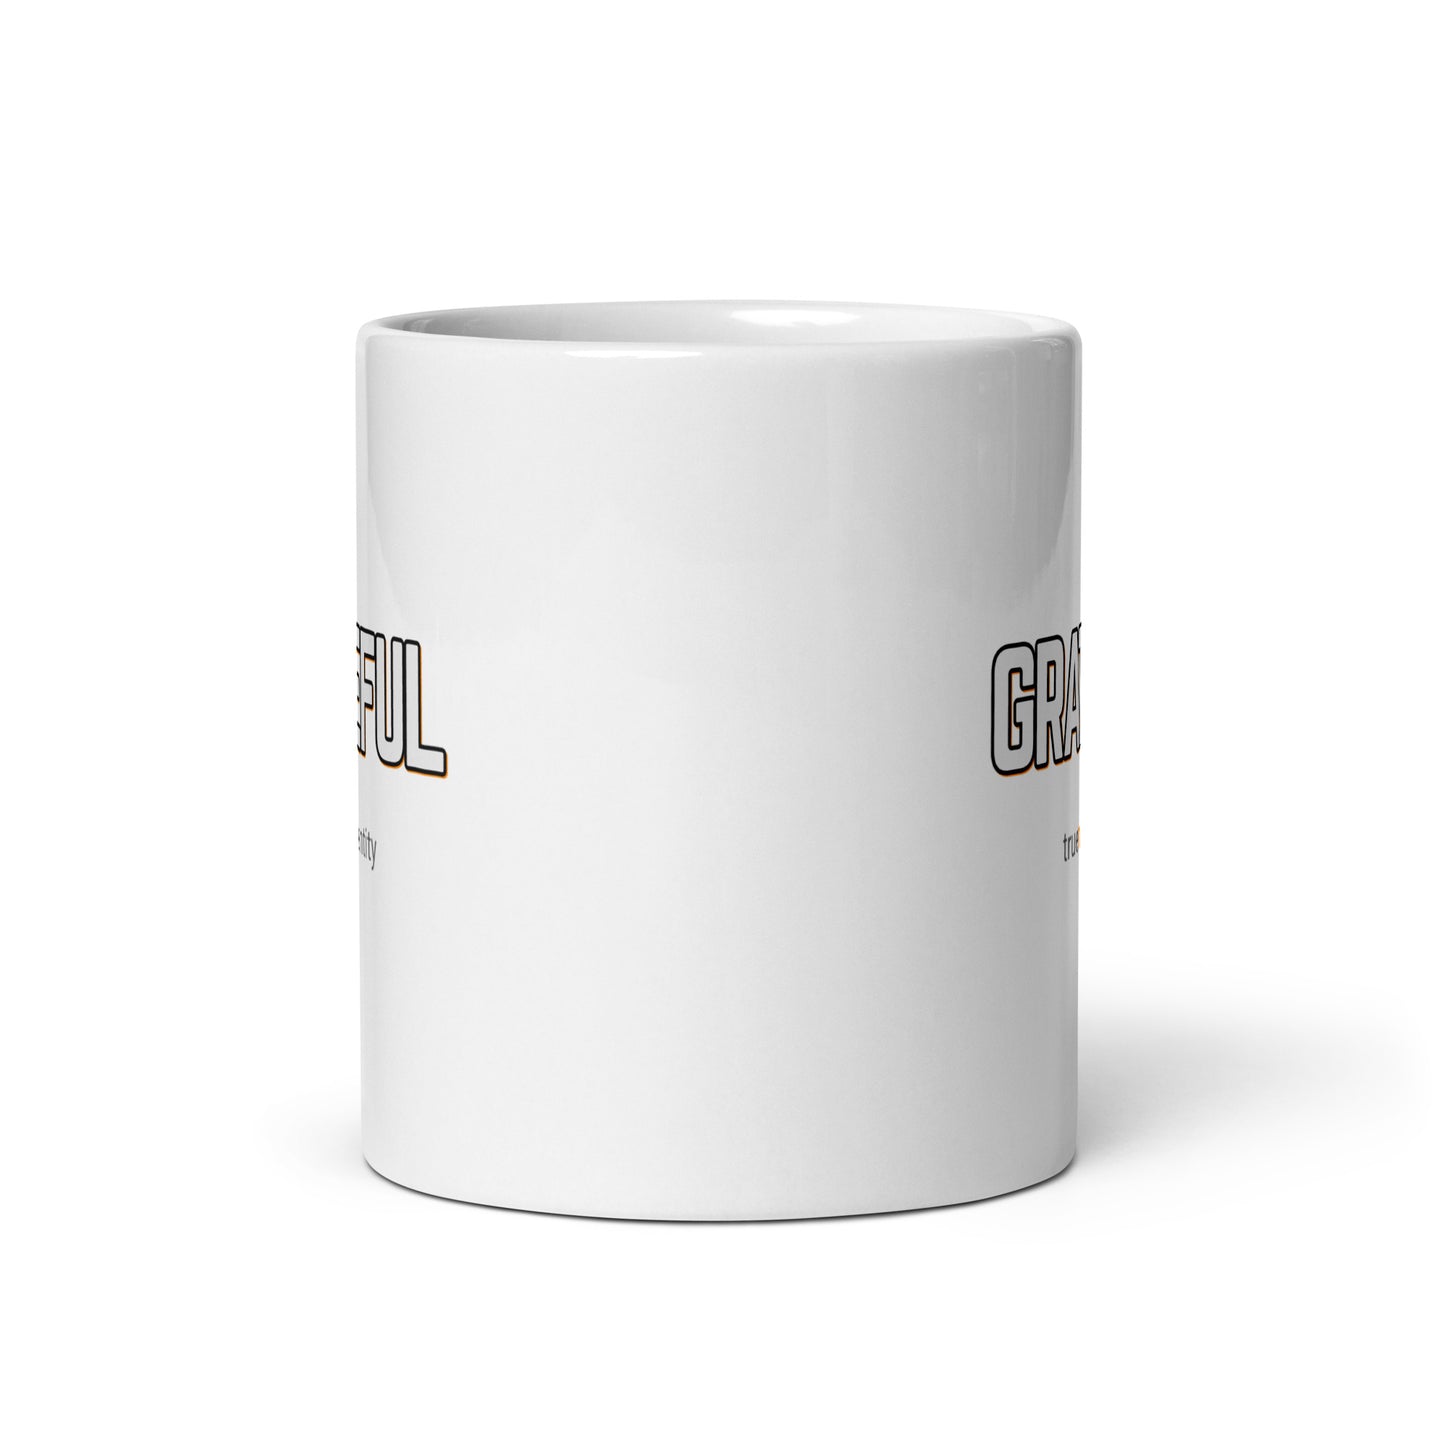 GRATEFUL White Coffee Mug Bold 11 oz or 15 oz